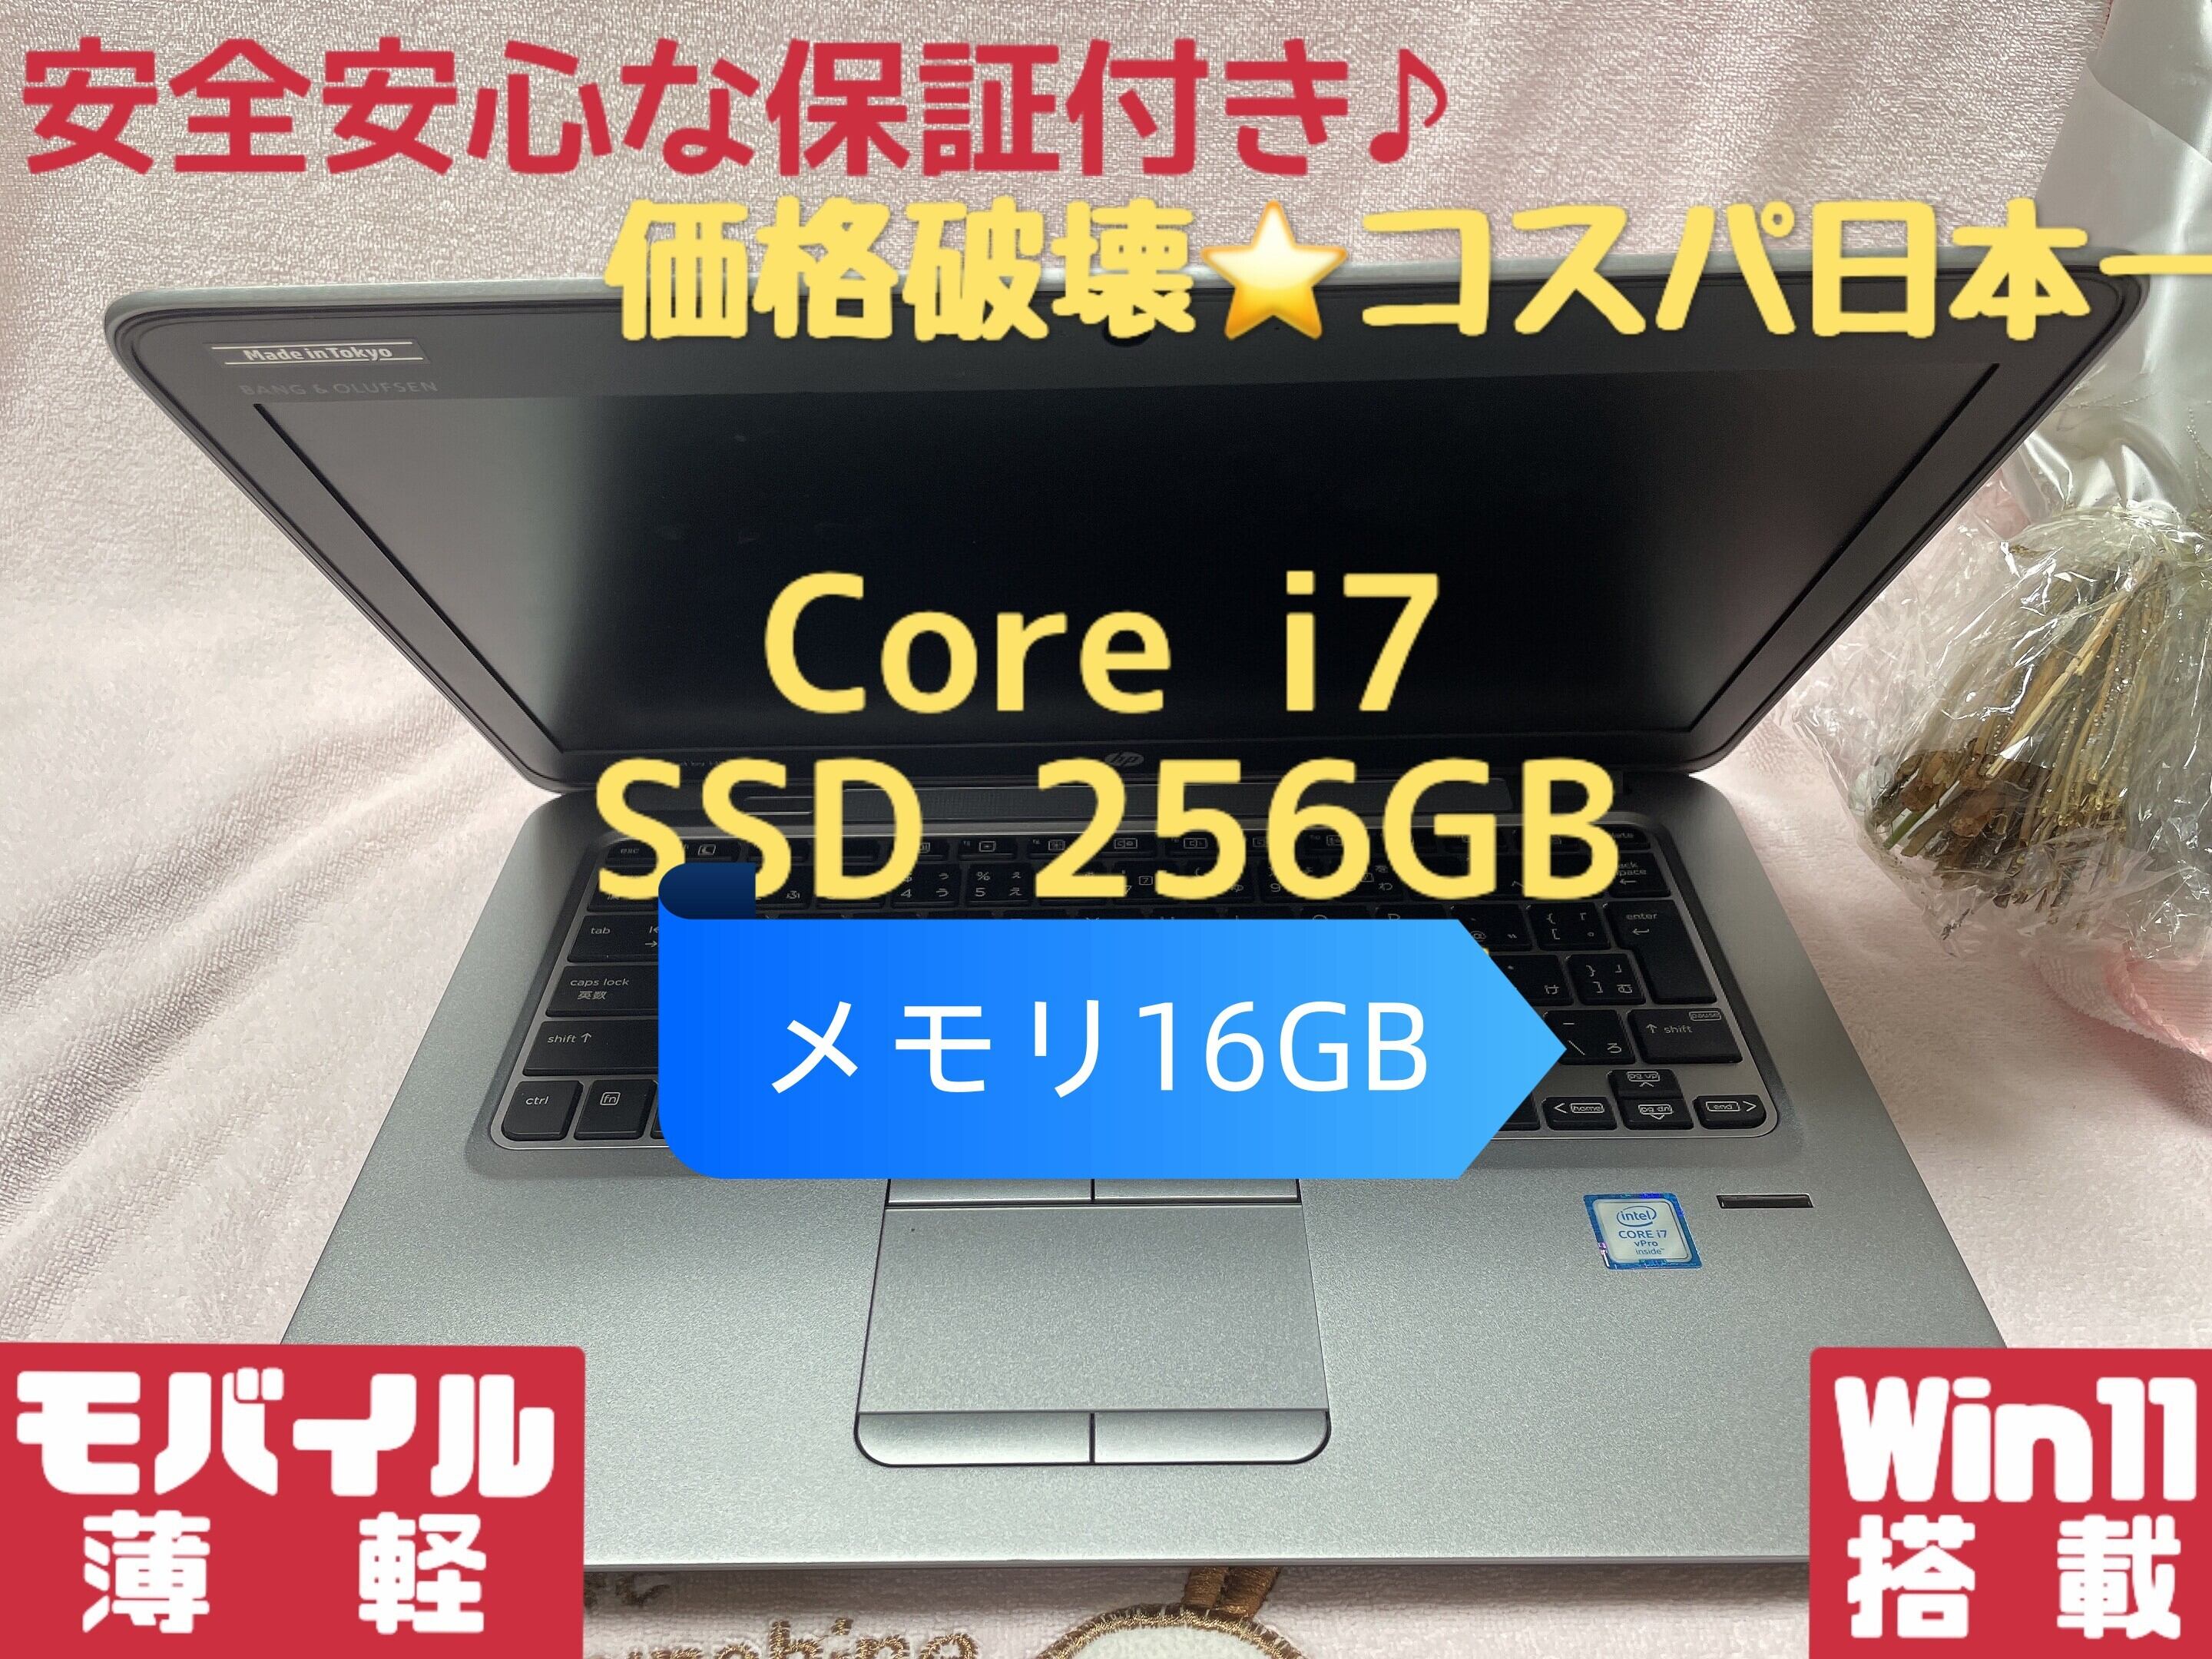 送料無料 保証付 HP 820 G3 8GB 日本製 Microsoft Office2013 WIFI有